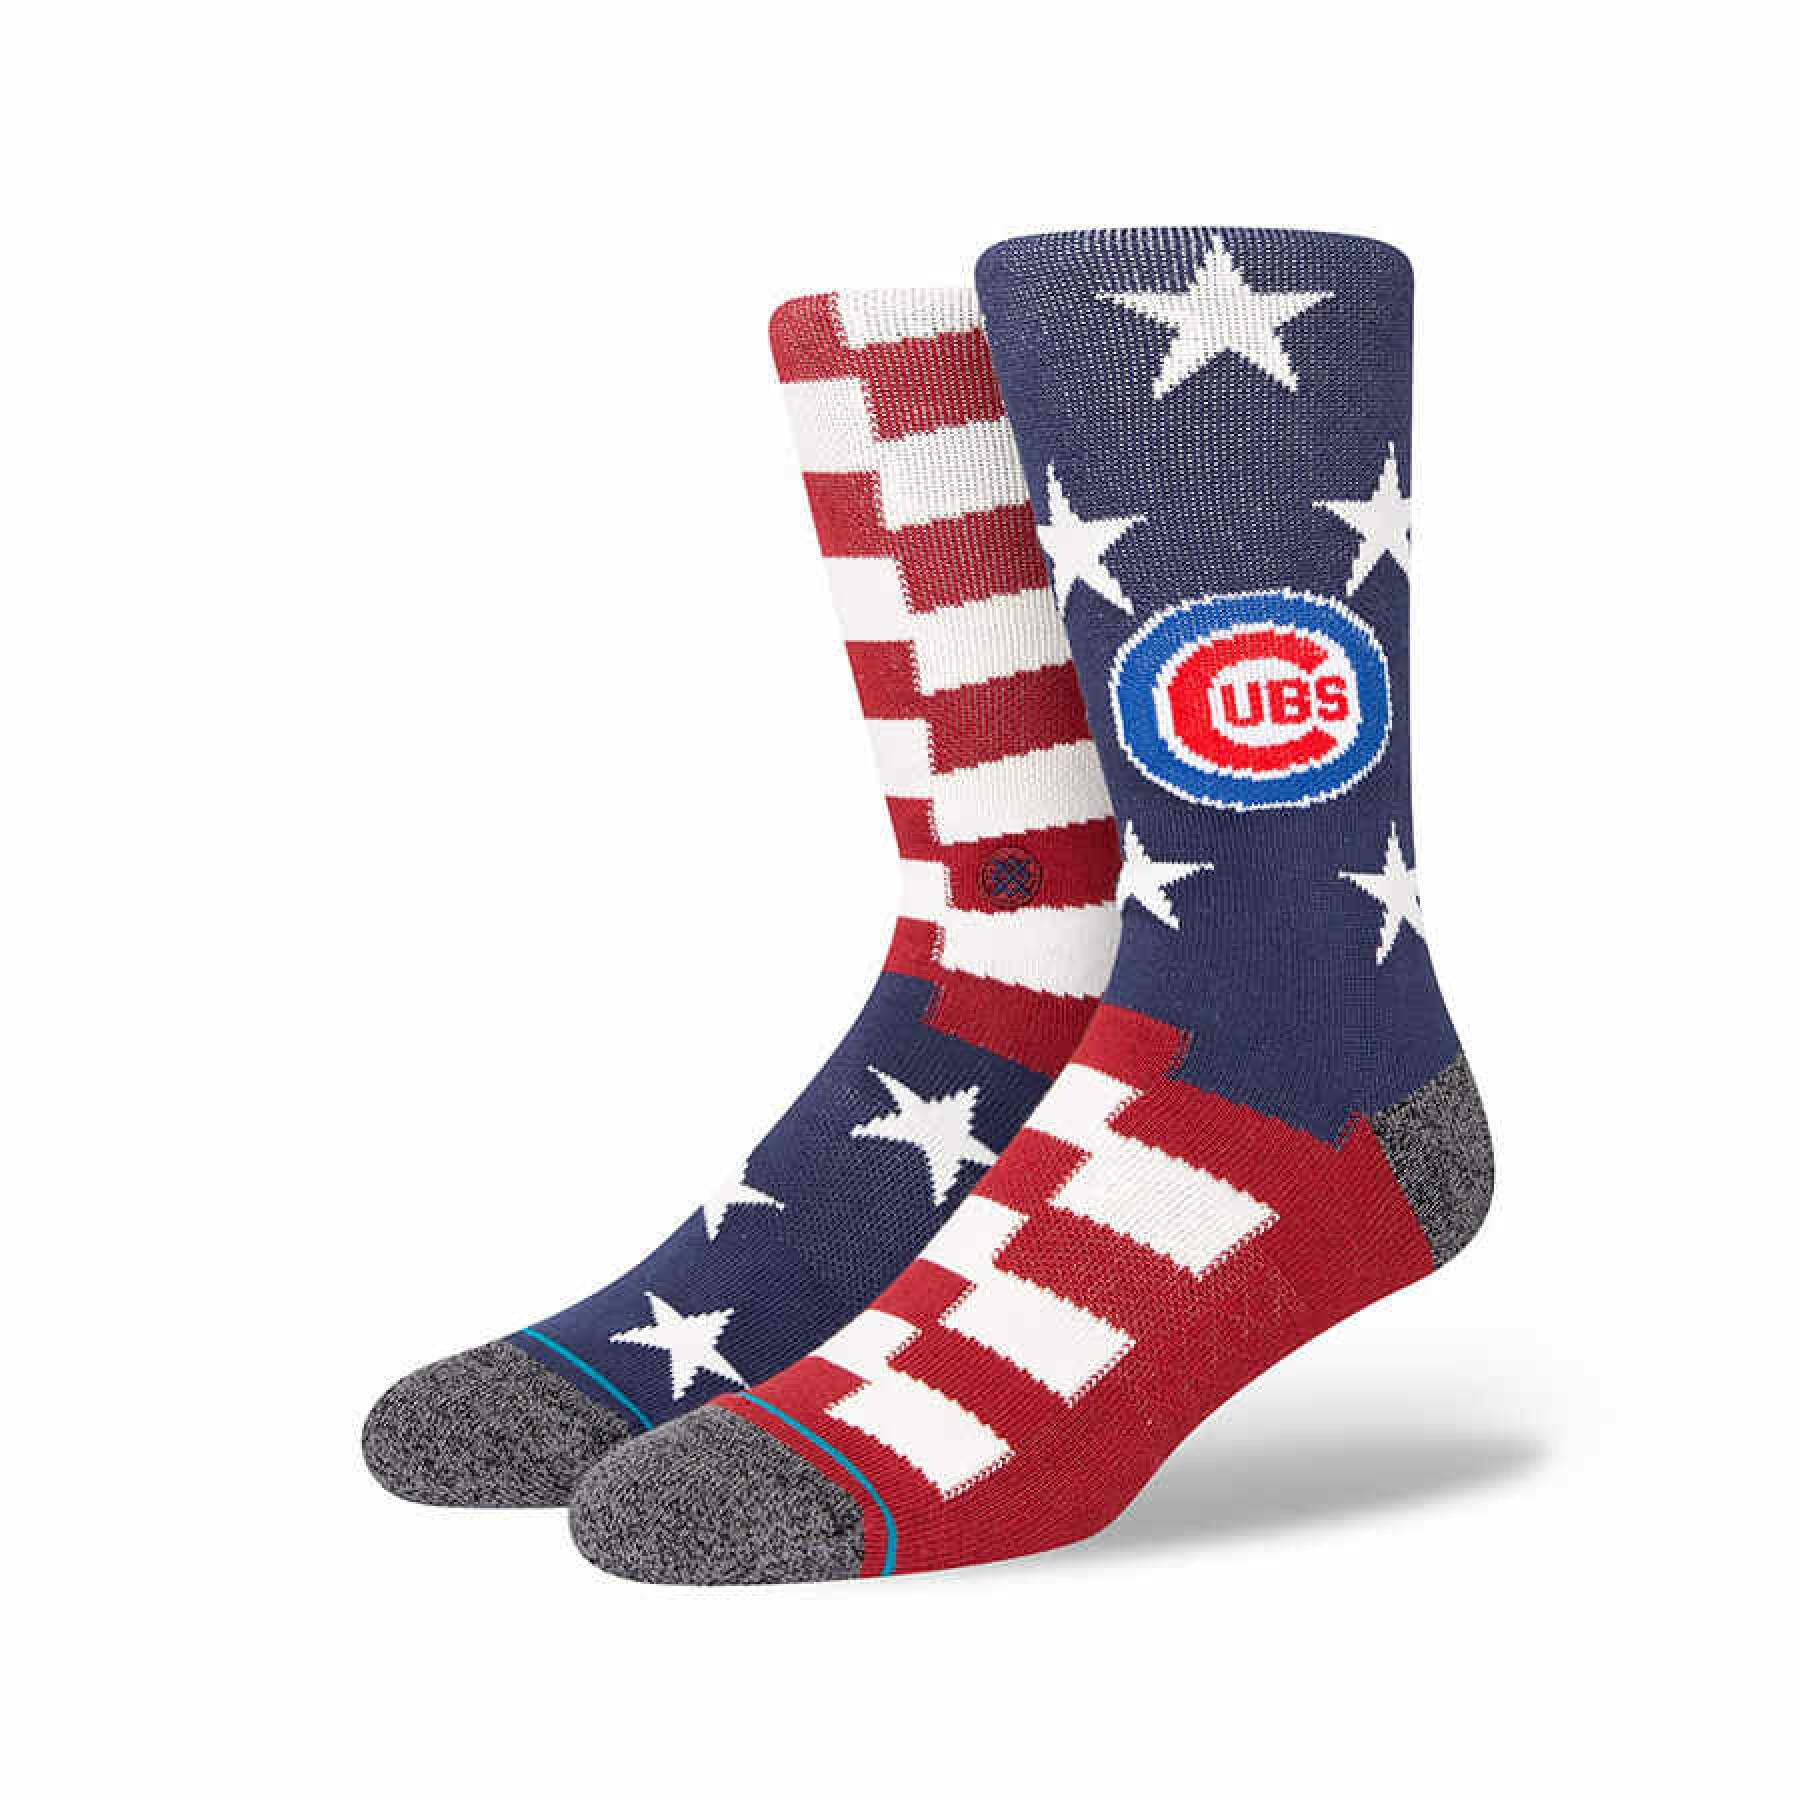 Brigade socks Chicago Cubs